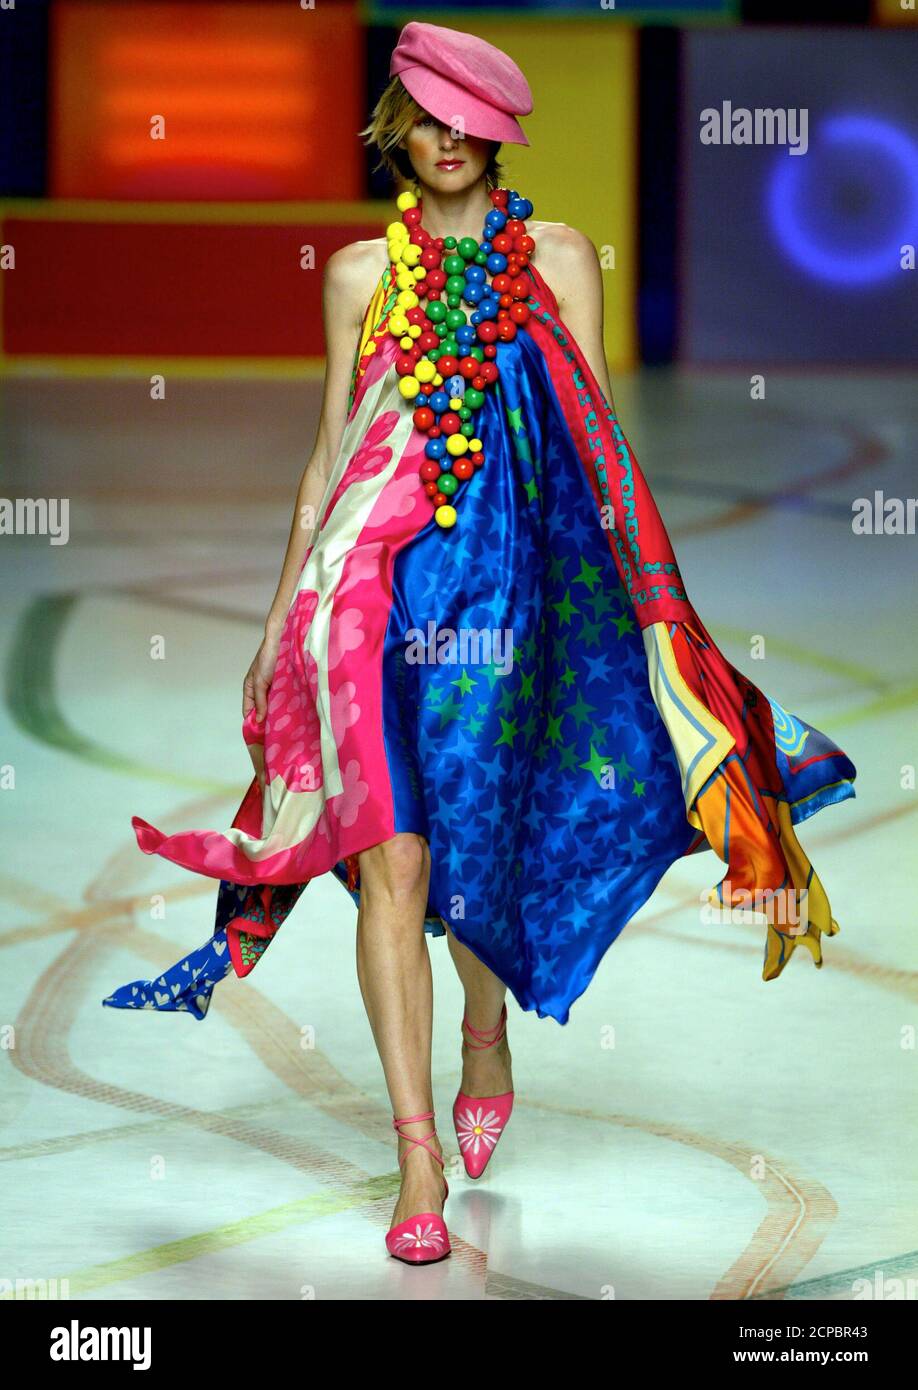 British model Stella Tennant displays an outfit created by designer Agatha  Ruiz de la Prada during the Spring/Summer 2004 Pasarela Cibeles fashion  week in Madrid September 24, 2003. The Pasarela Cibeles will